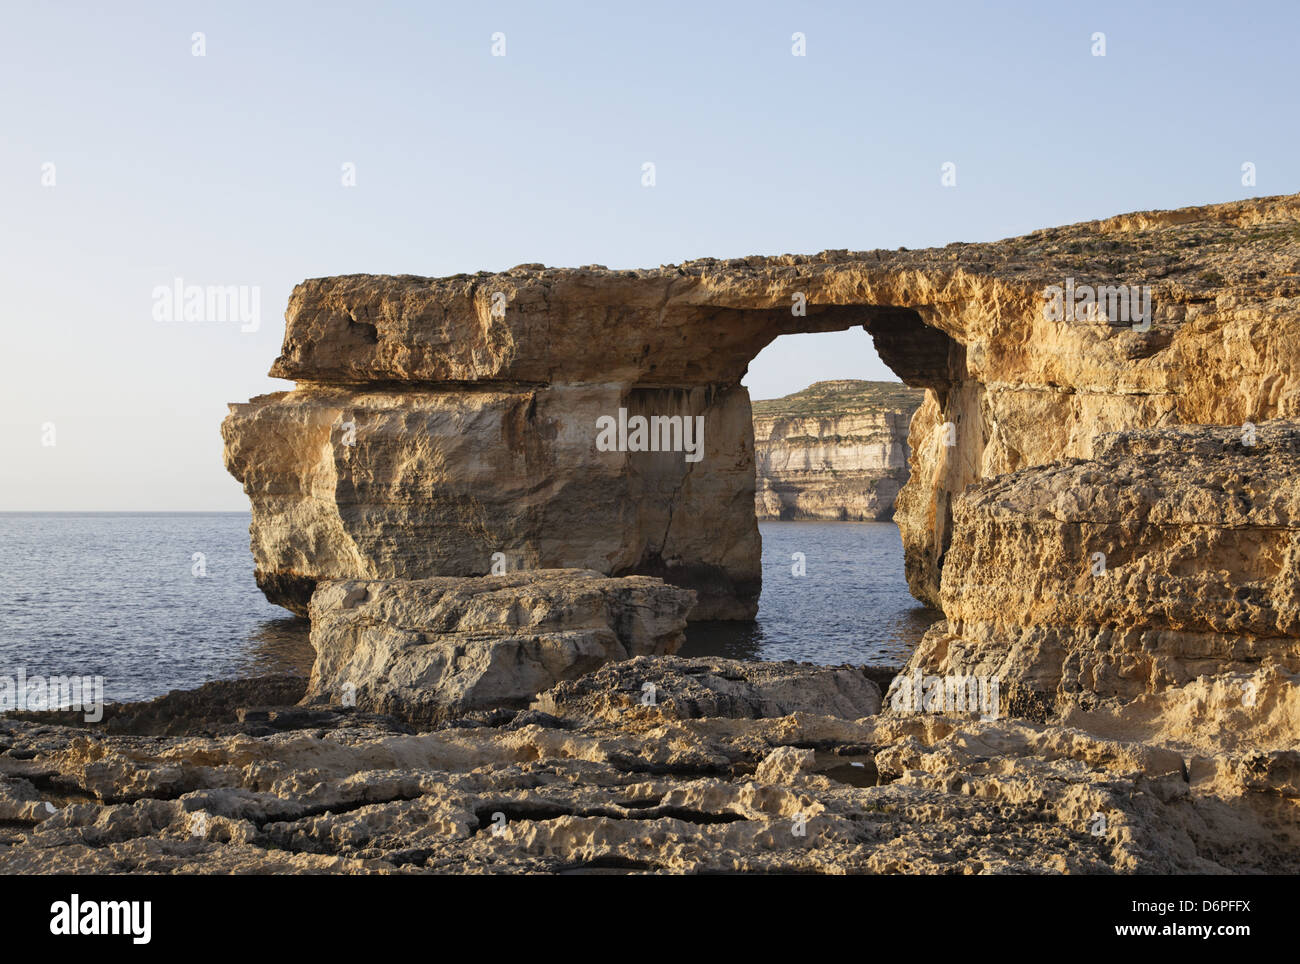 Malta, Gozo, Dwejra, 'Azure Window', a natural rock arch, coast, cliffs, sunset light peaceful, harmonious, San Lawrenz, Malta, Stock Photo